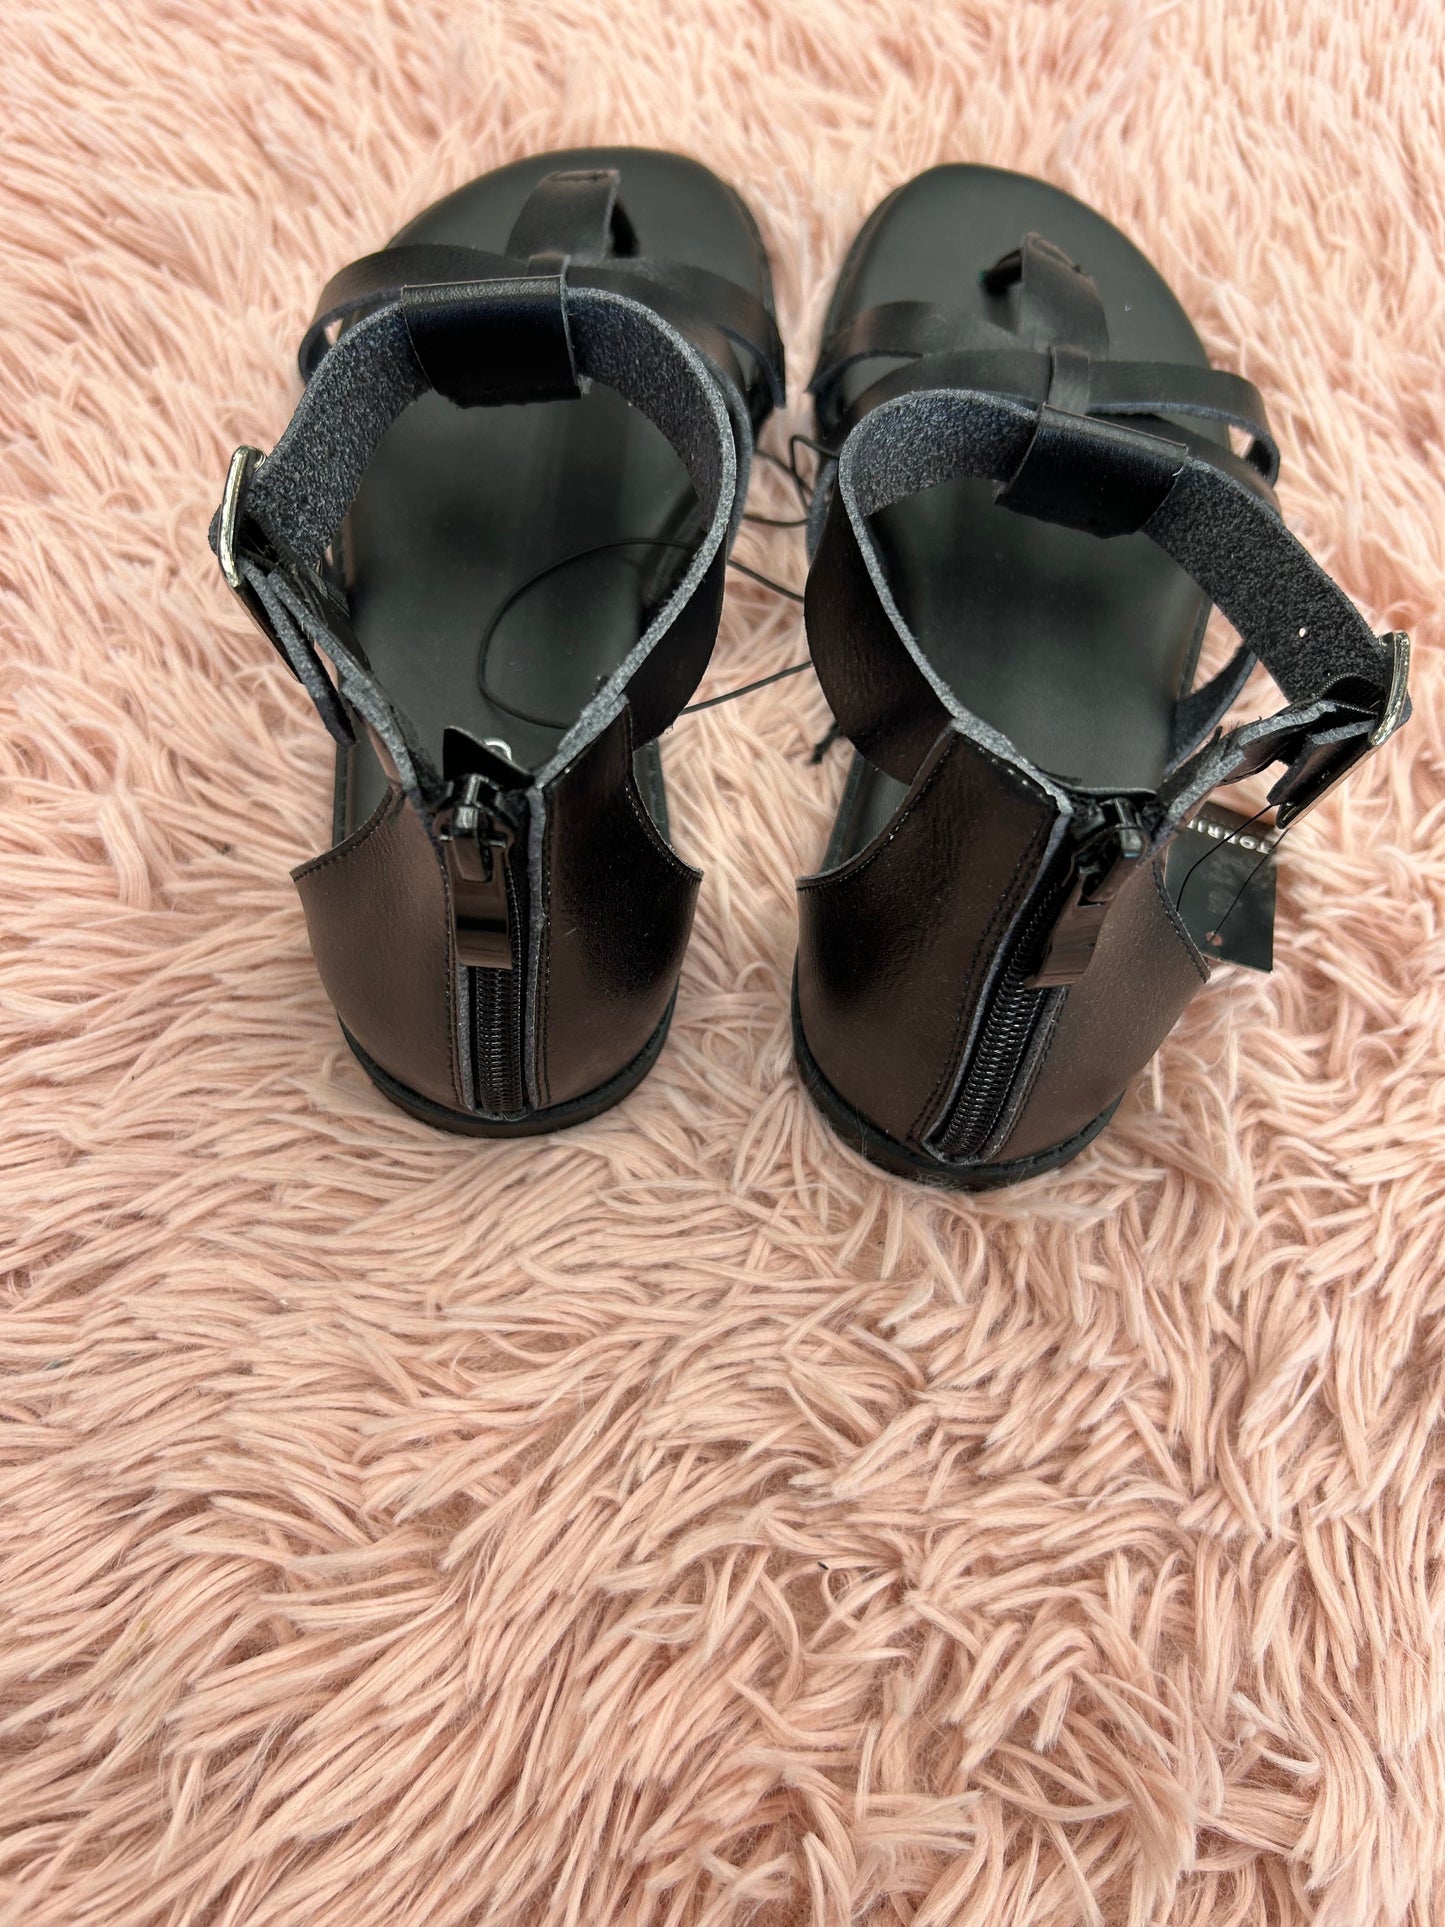 Sandals Flats By Torrid  Size: 7